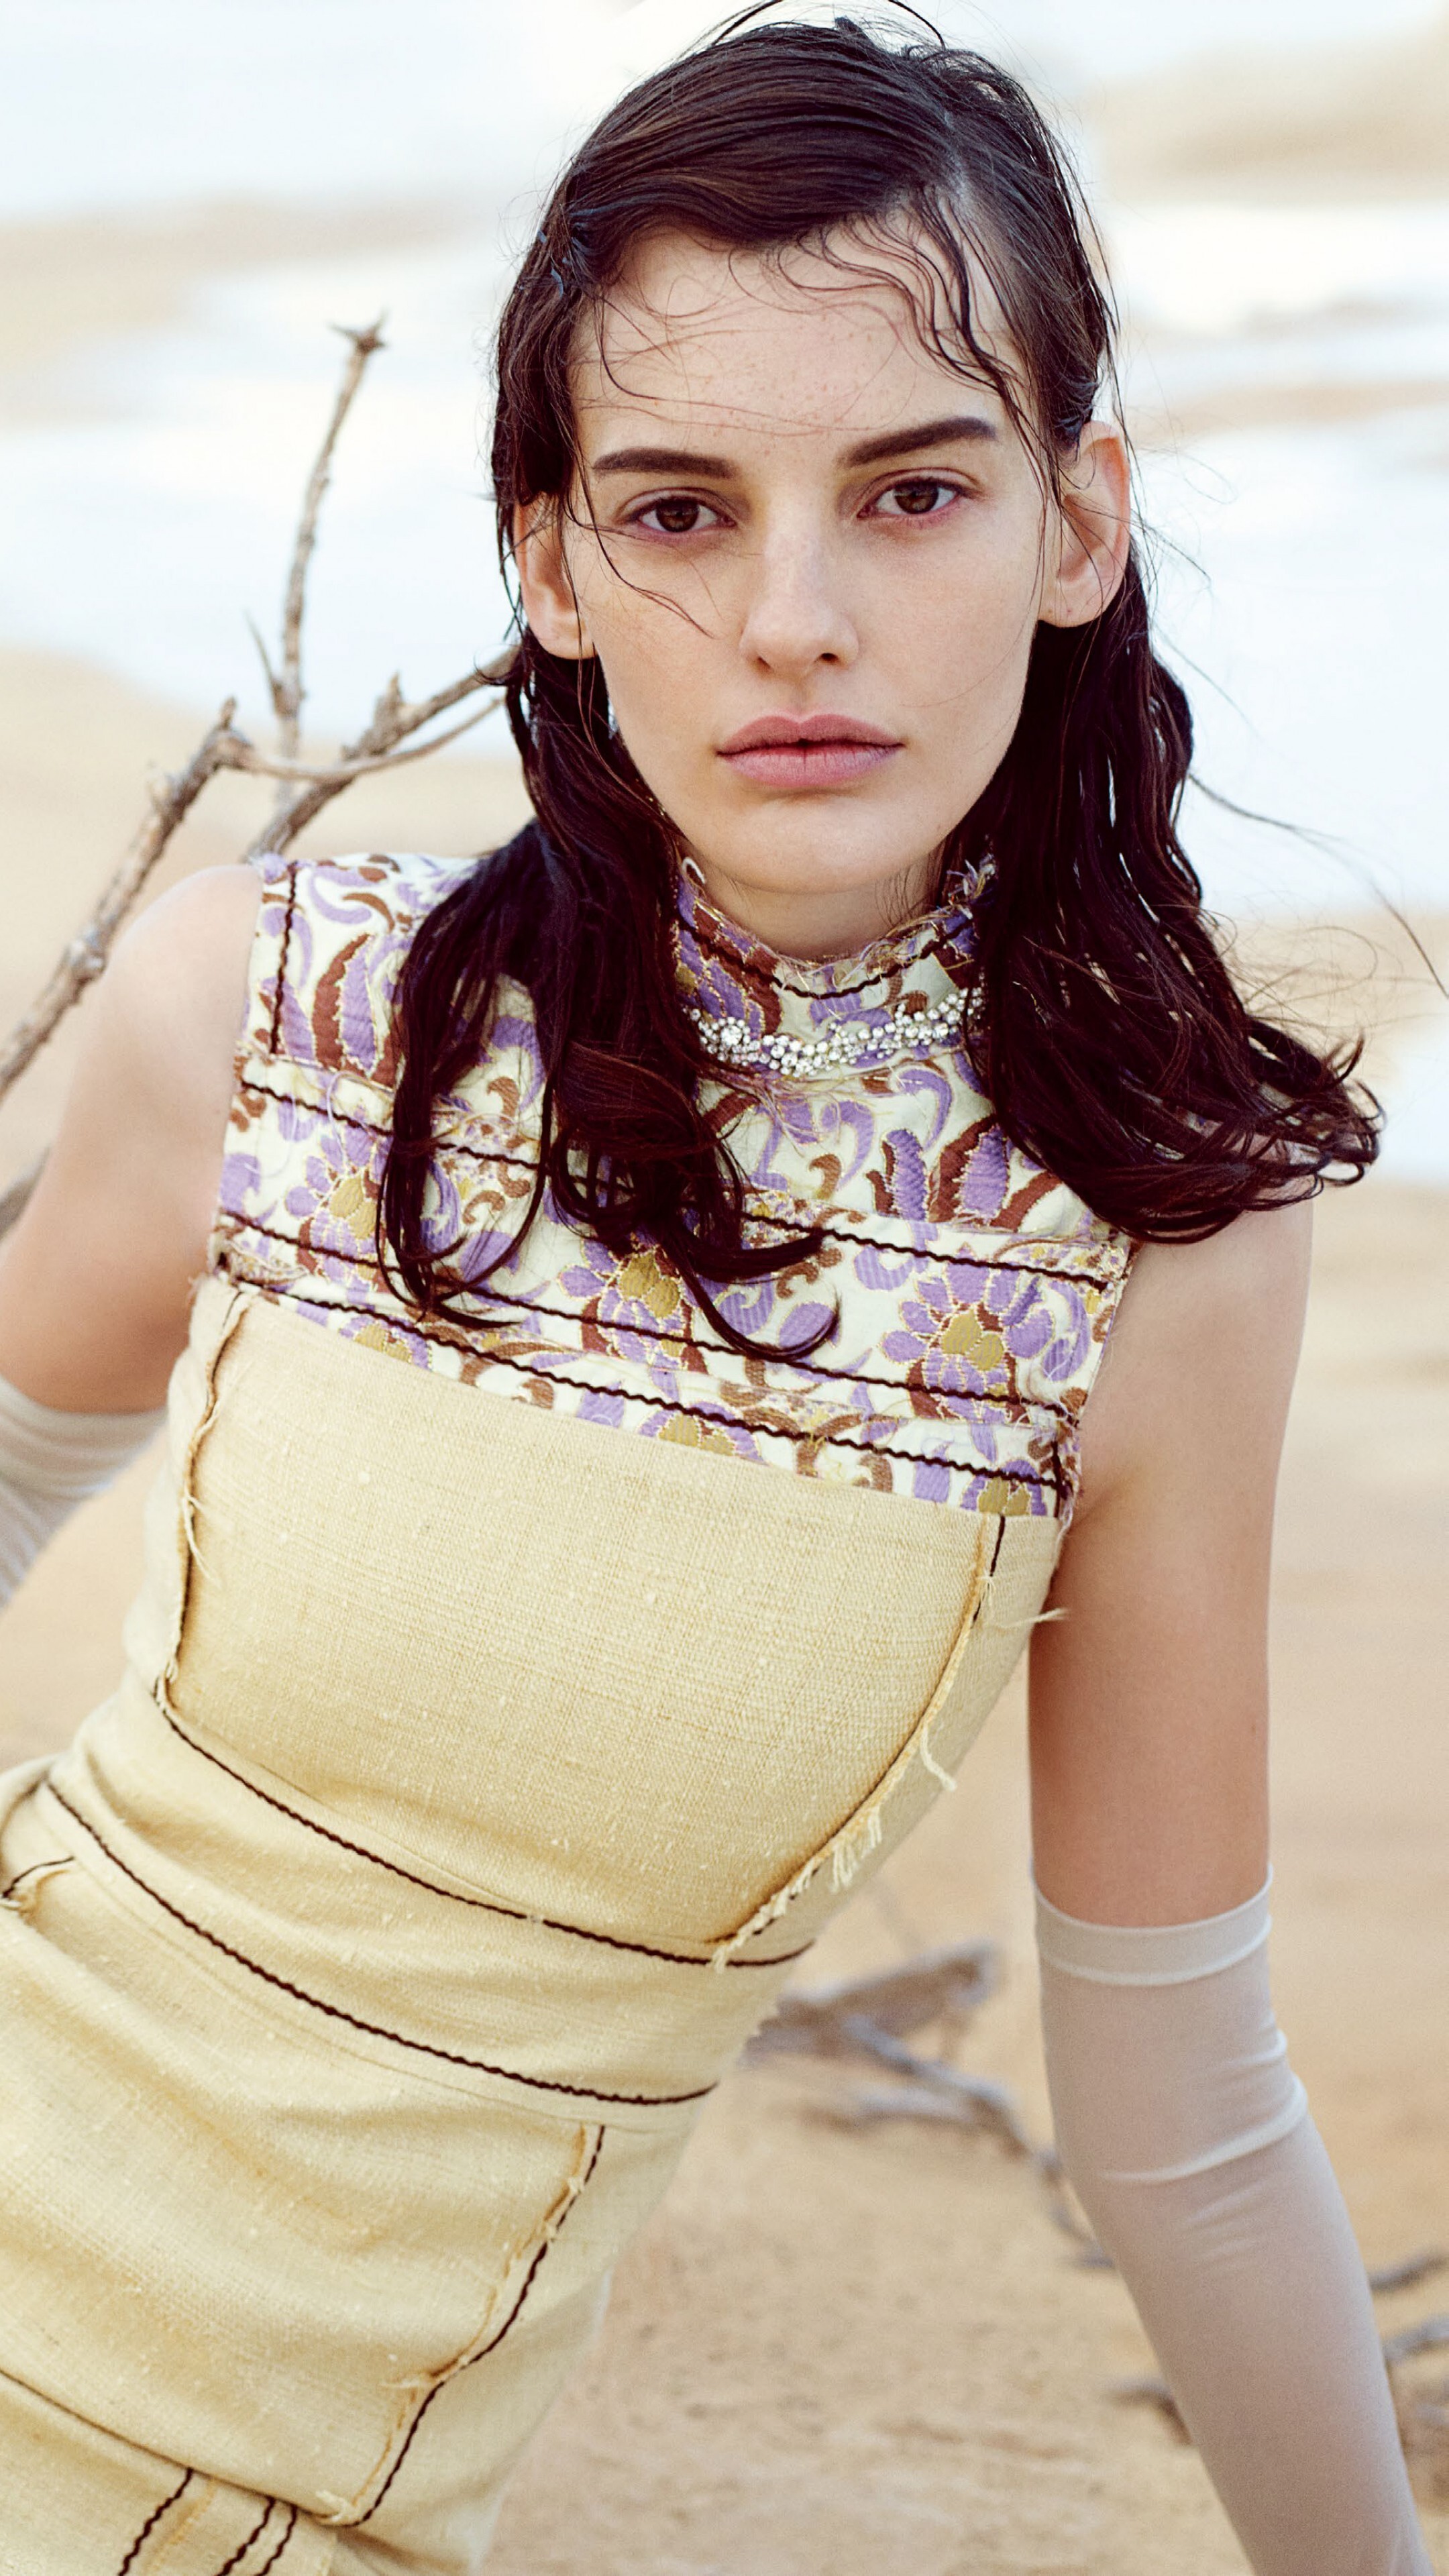 Fashion Model: Amanda Murphy, An American fashion model, Best known for being a Prada muse. 2160x3840 4K Background.